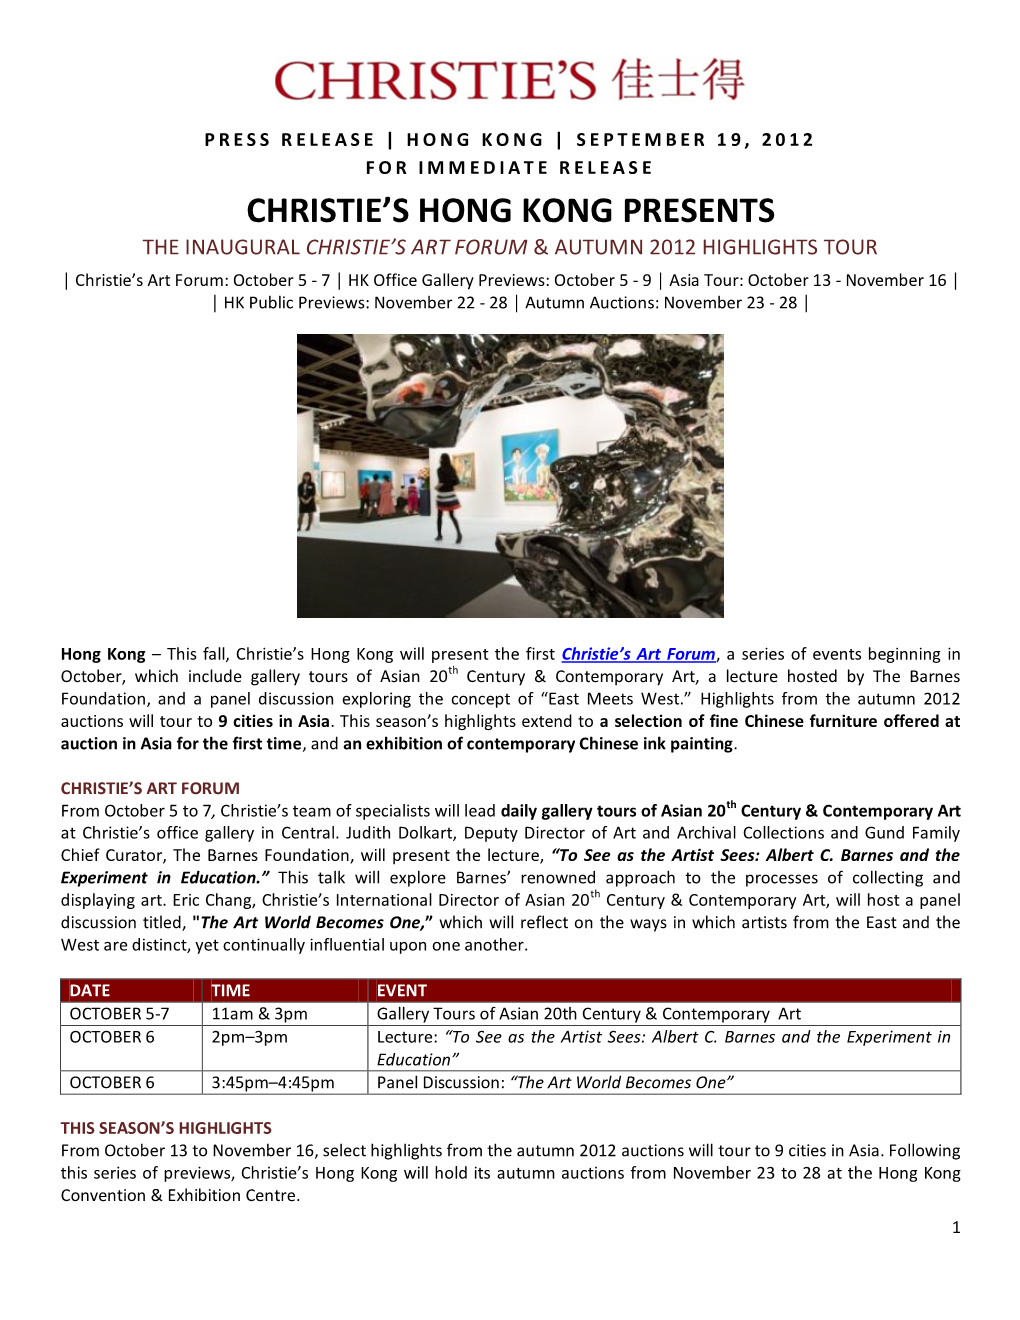 Christie's Hong Kong Presents